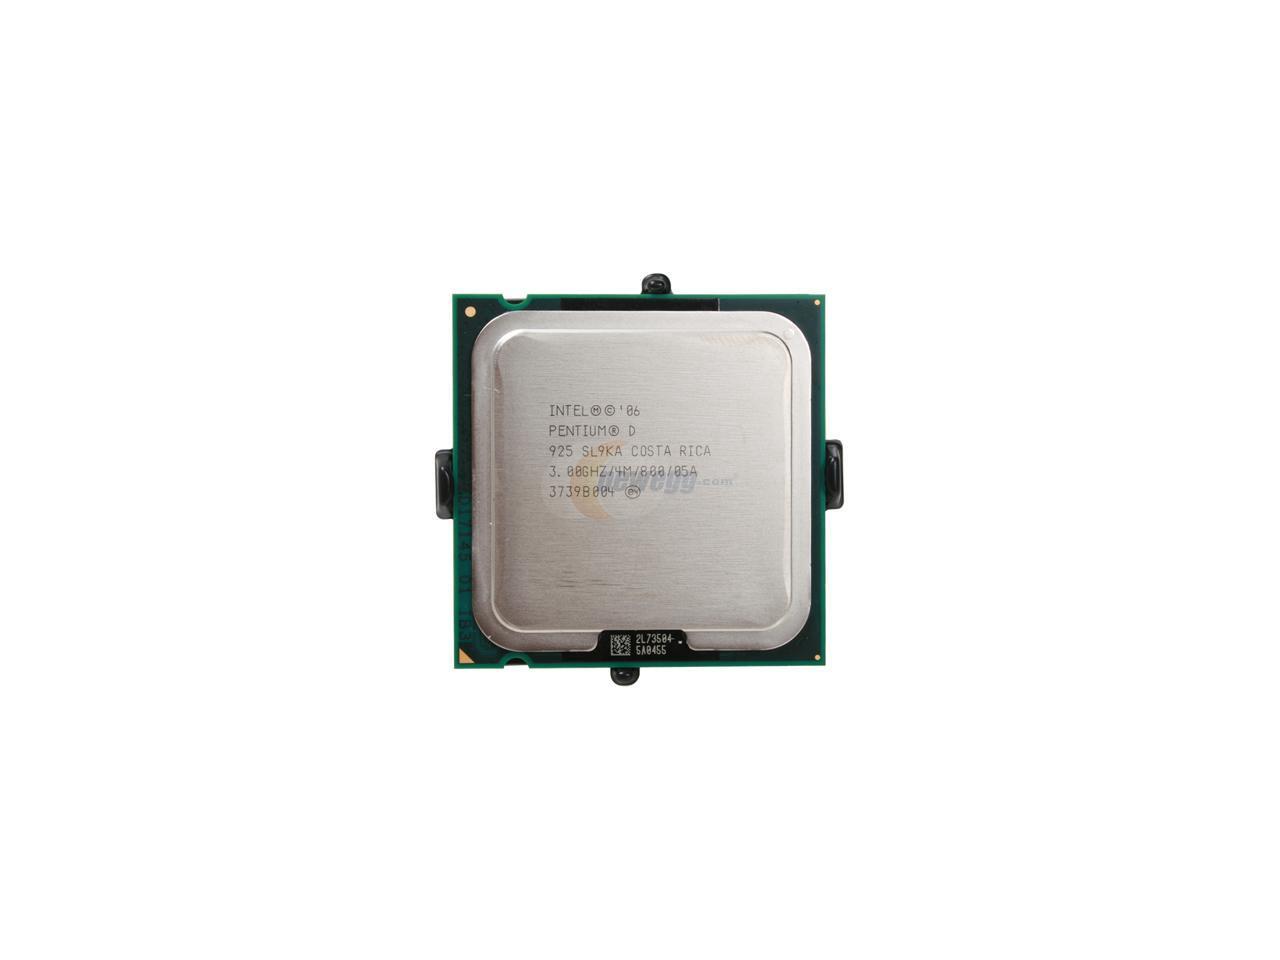 Intel Pentium D 925 3.0 GHz LGA 775 HH80553PG0804MN Processor - Newegg.com